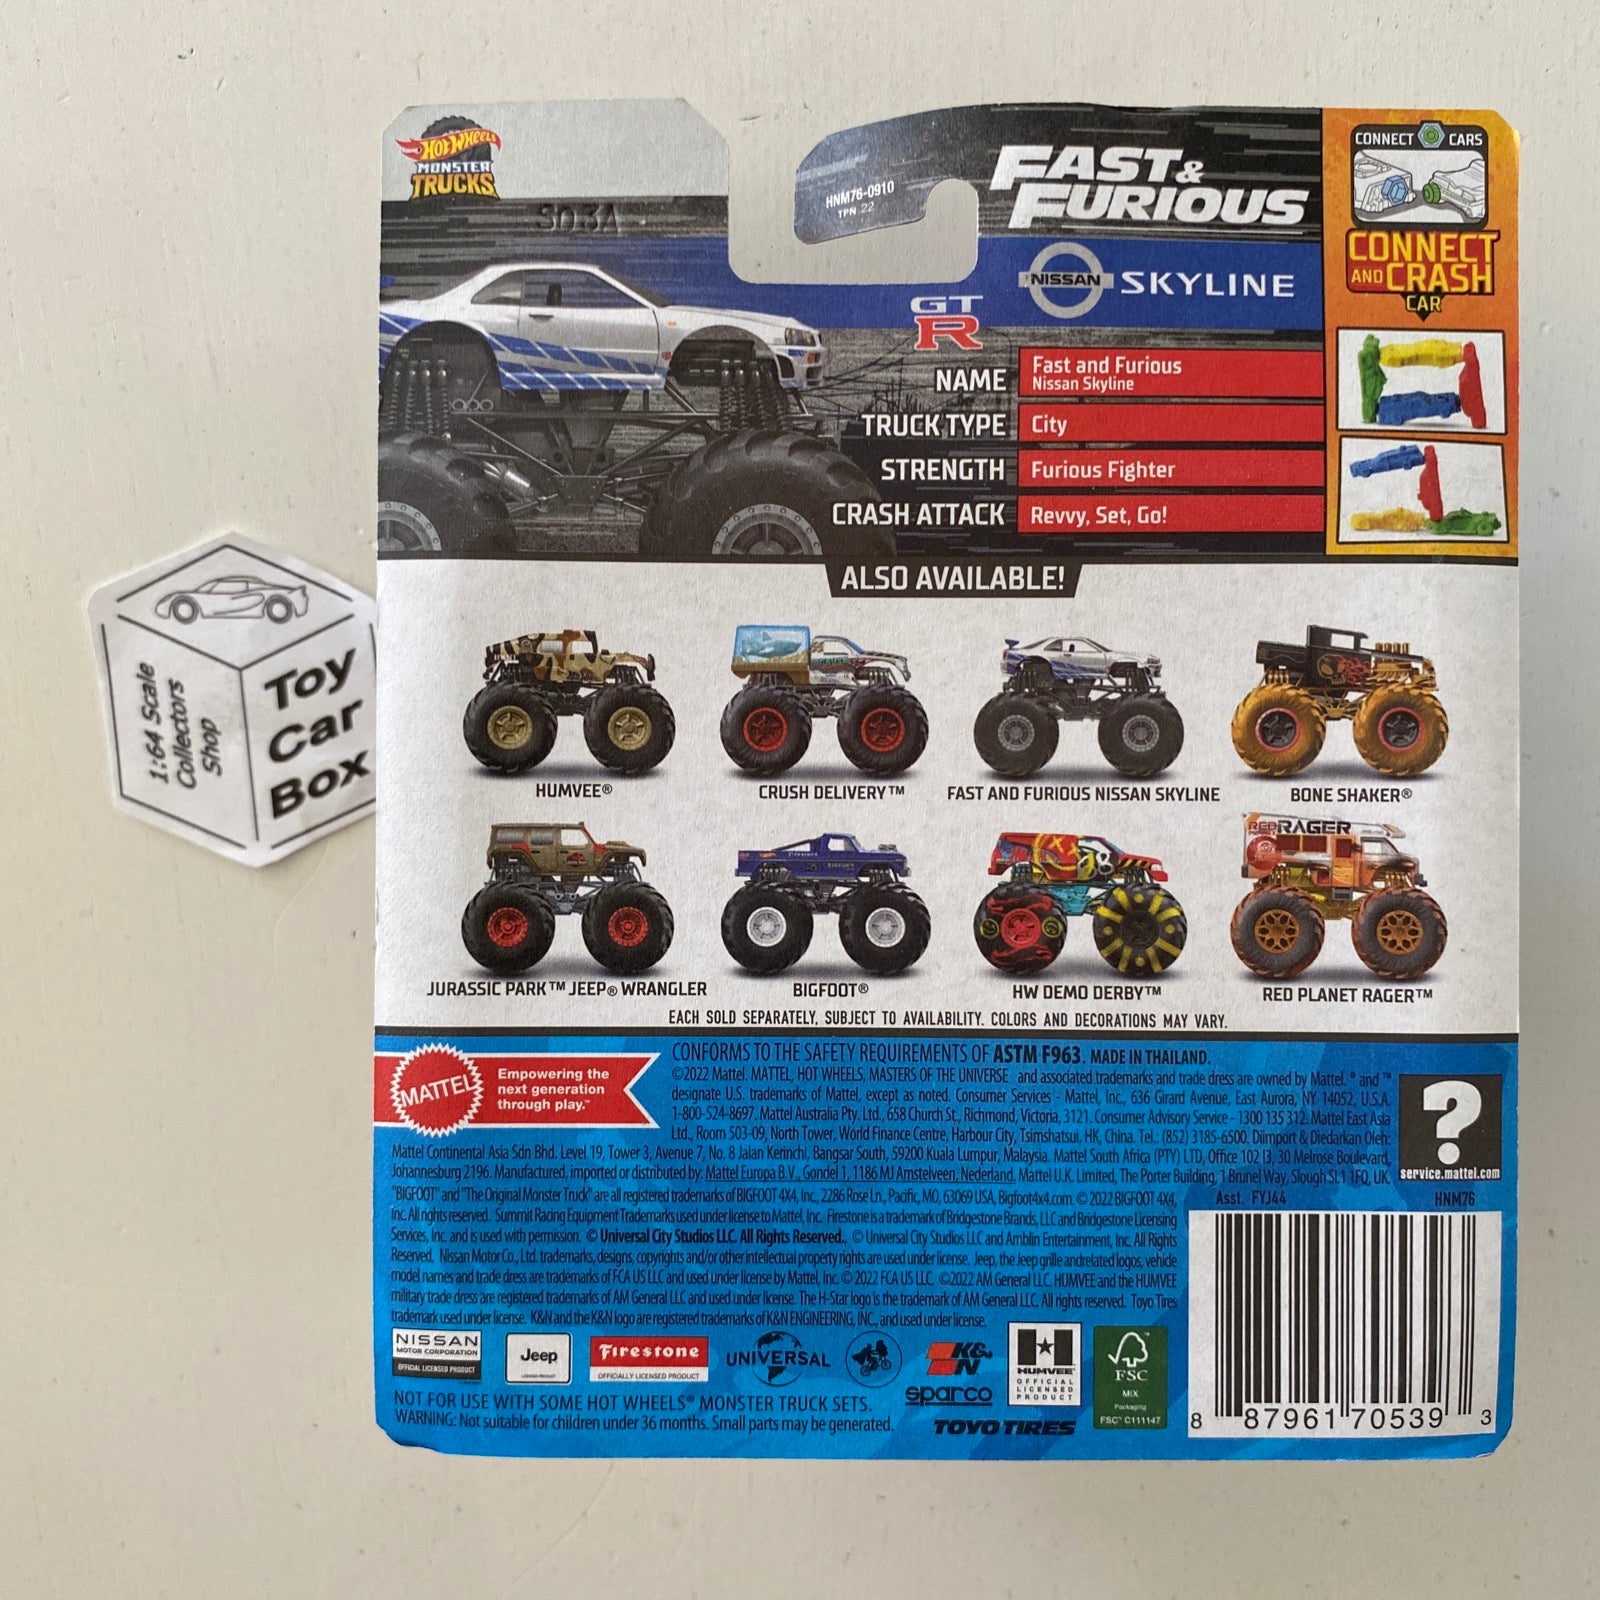 2024 HOT WHEELS Monster Trucks - Dodge Ram Van - Crash Legends - E75 – Toy  Car Box